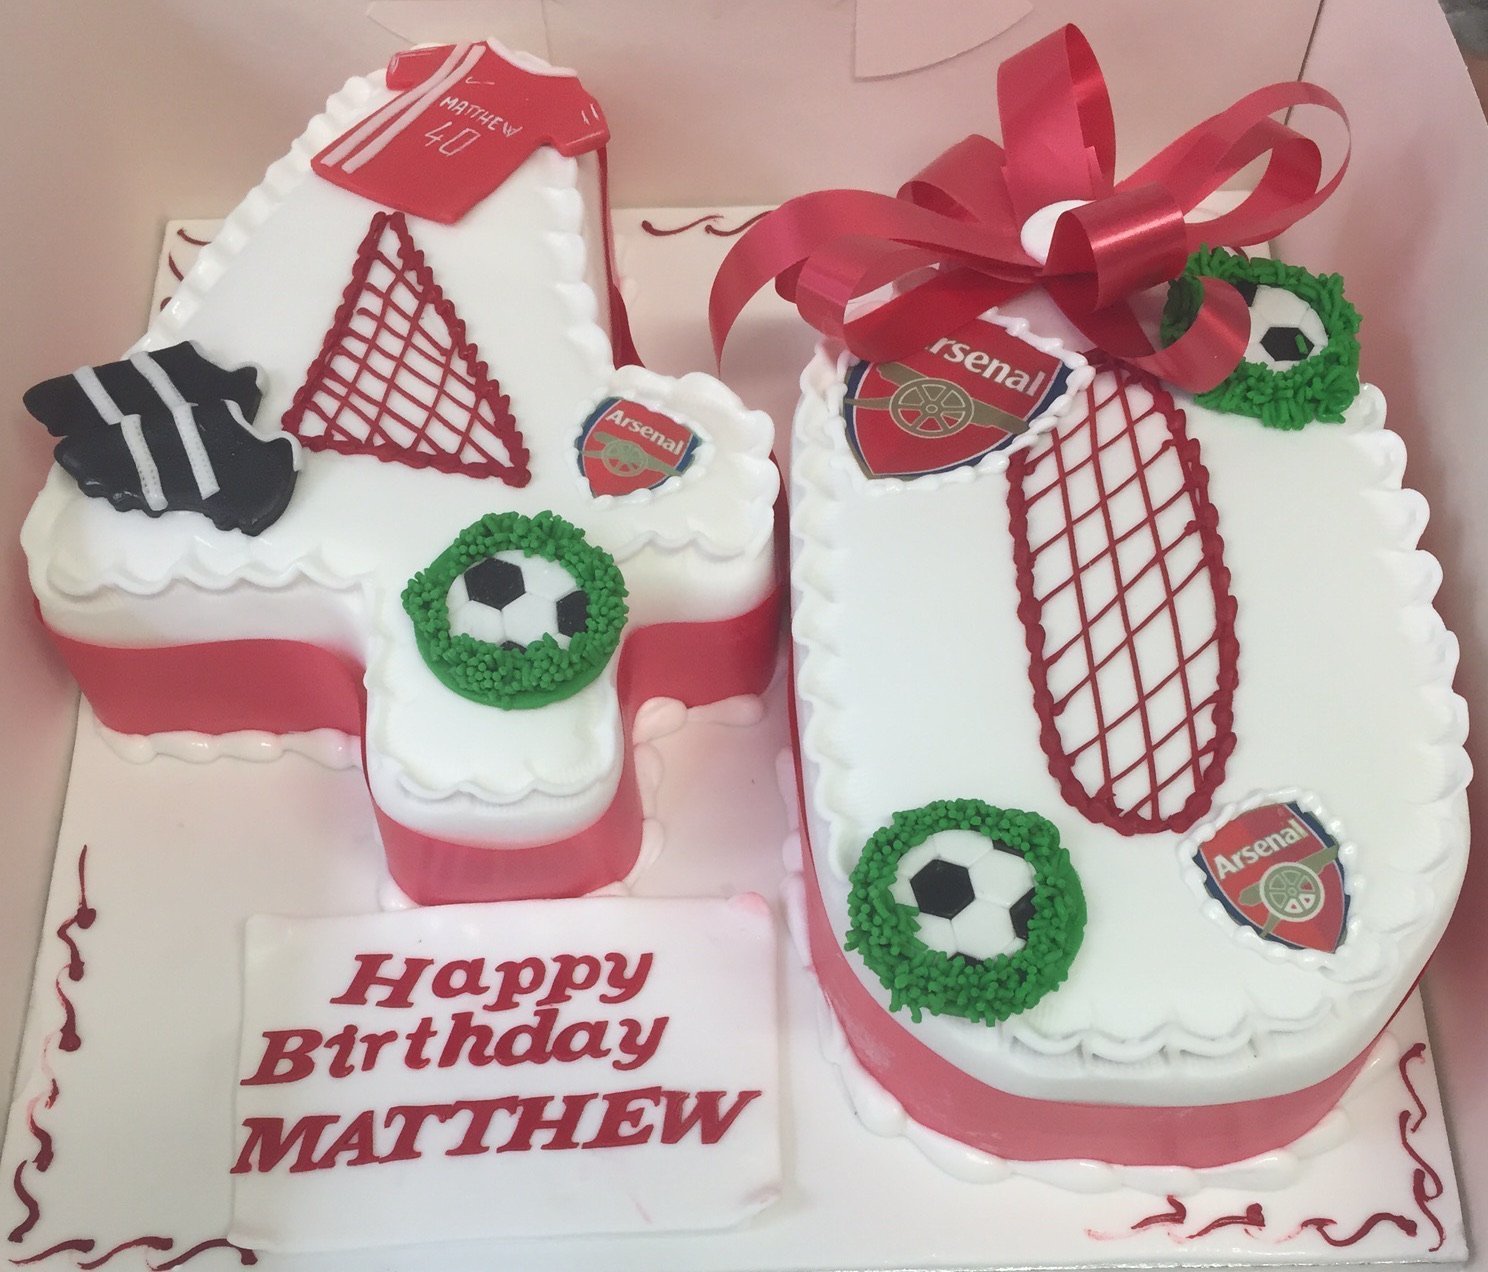 Arsenal Cake for a 30th birthday! | Happy Cake Studio